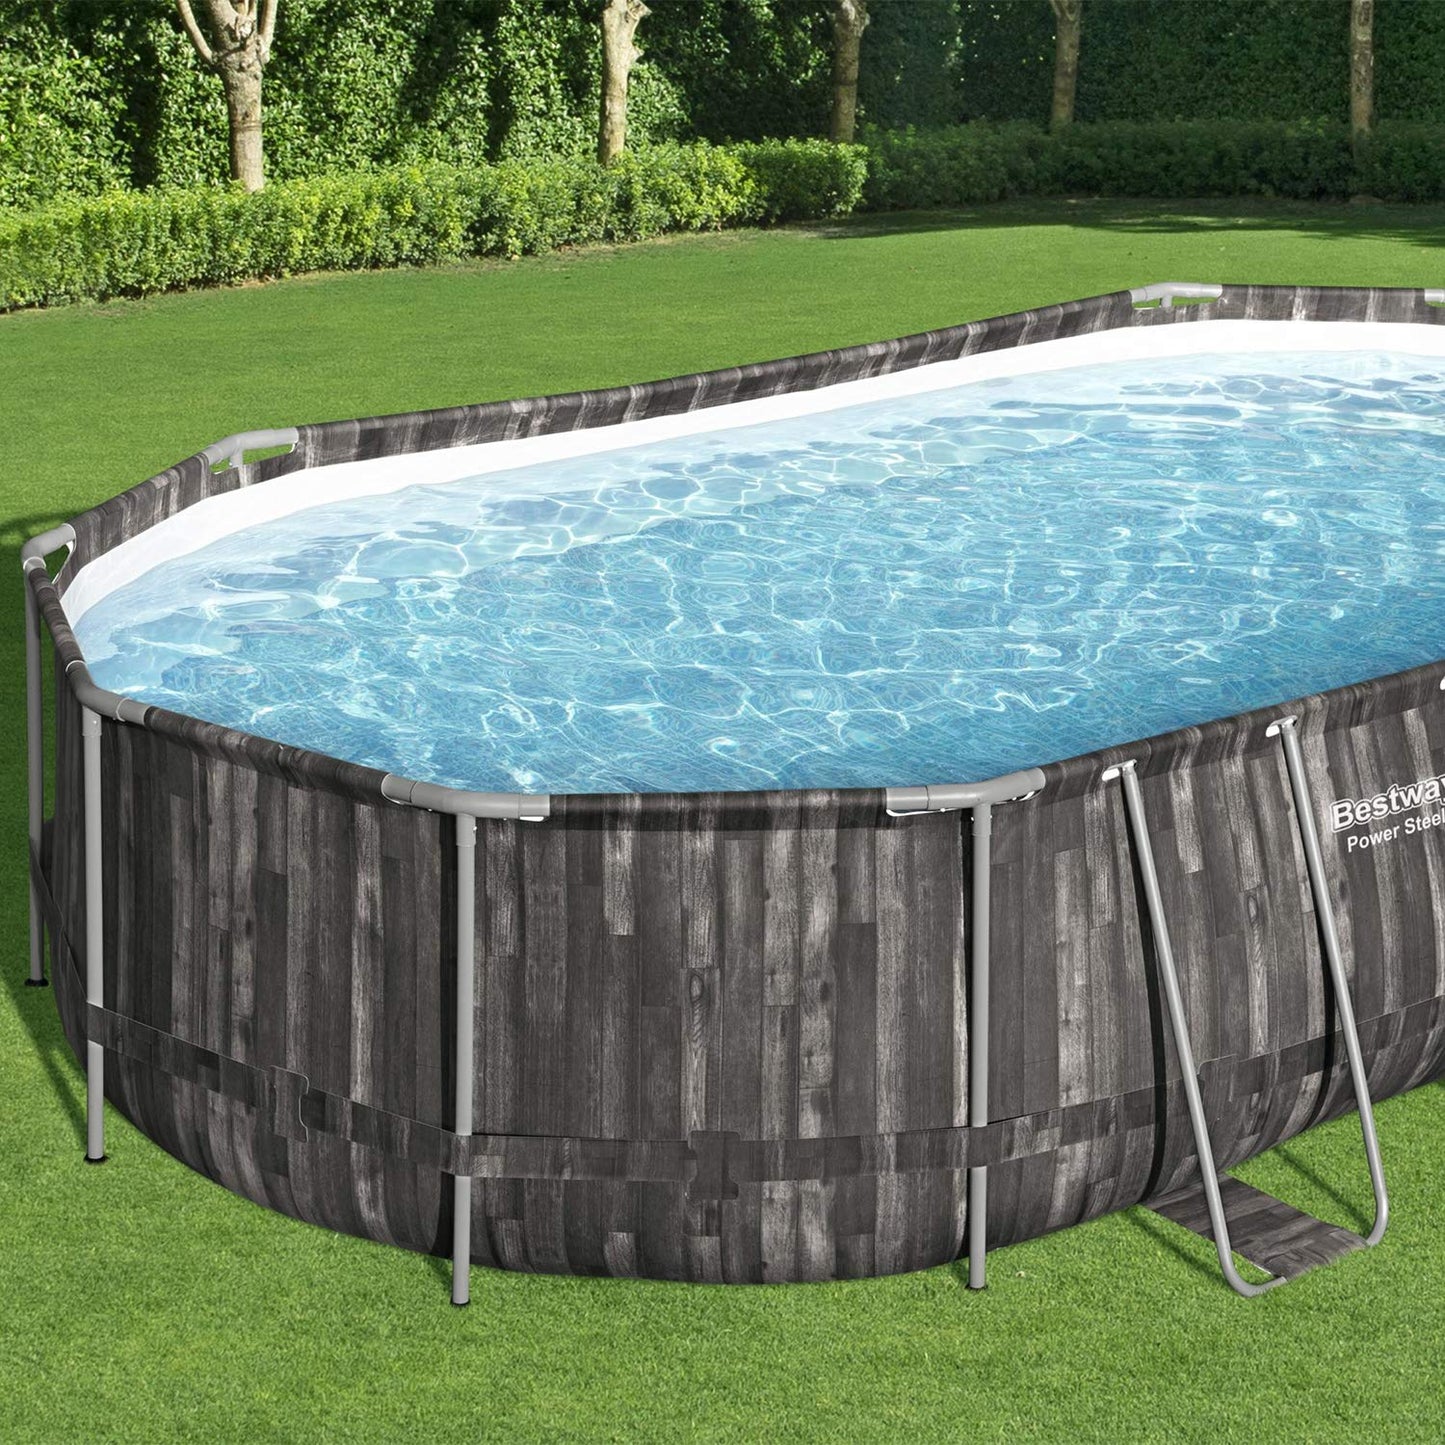 Bestway Power Steel 20' x 12' x 48" Oval Metal Frame Above Ground Outdoor Swimming Pool Set